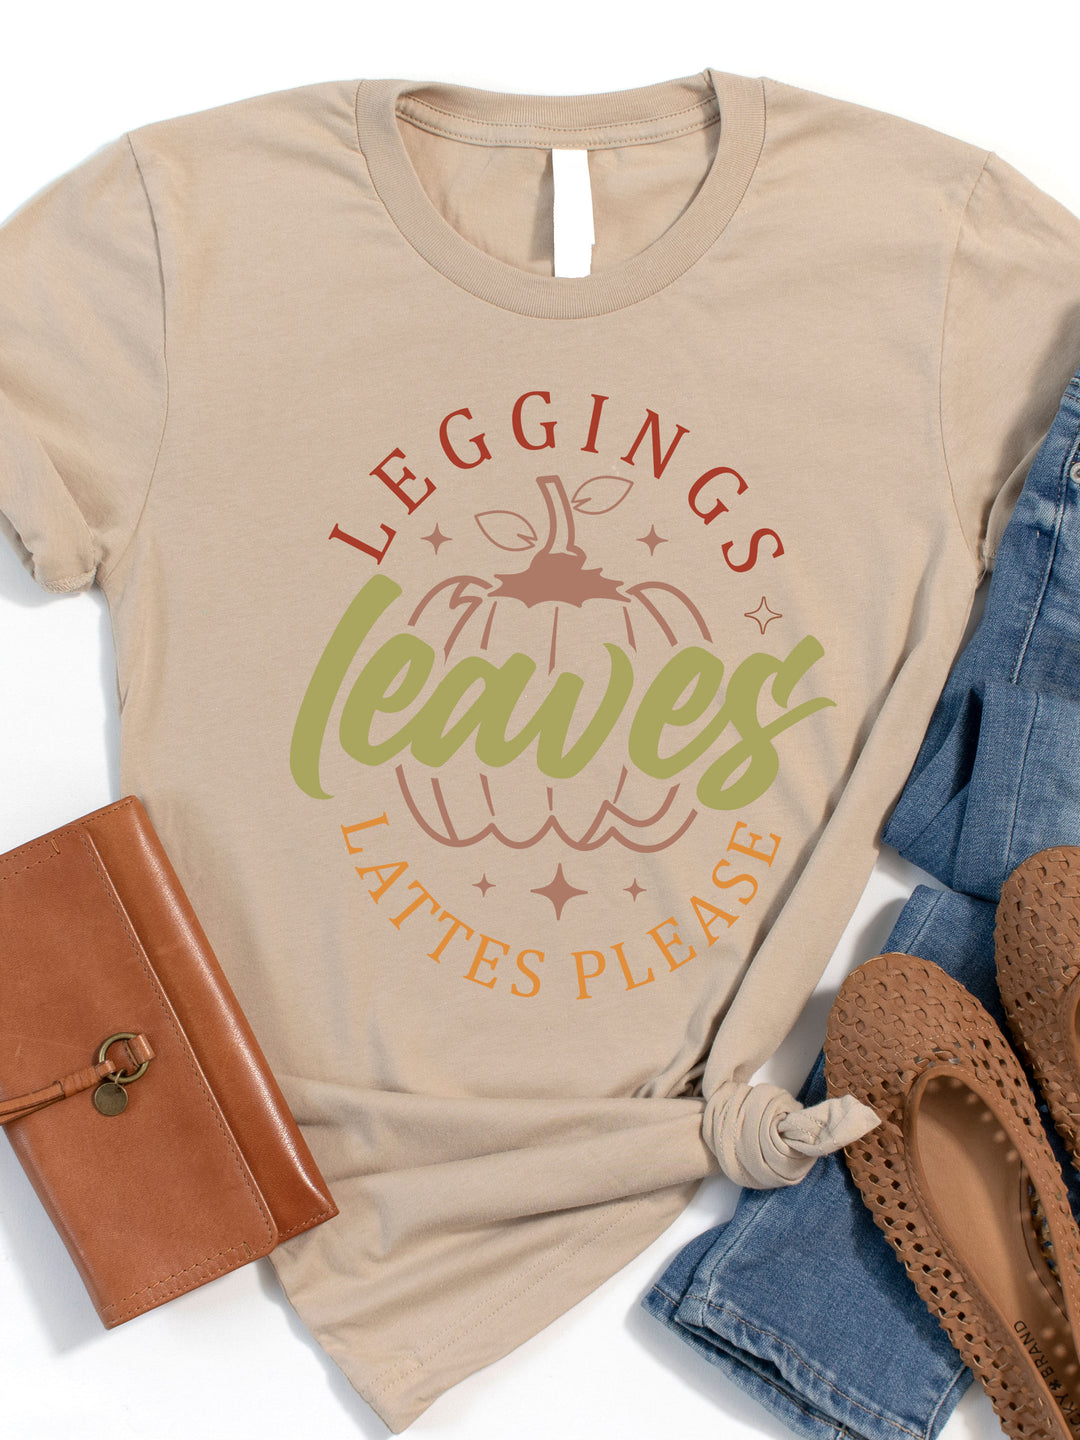 Leggings Leaves Lattes Please Graphic Tee